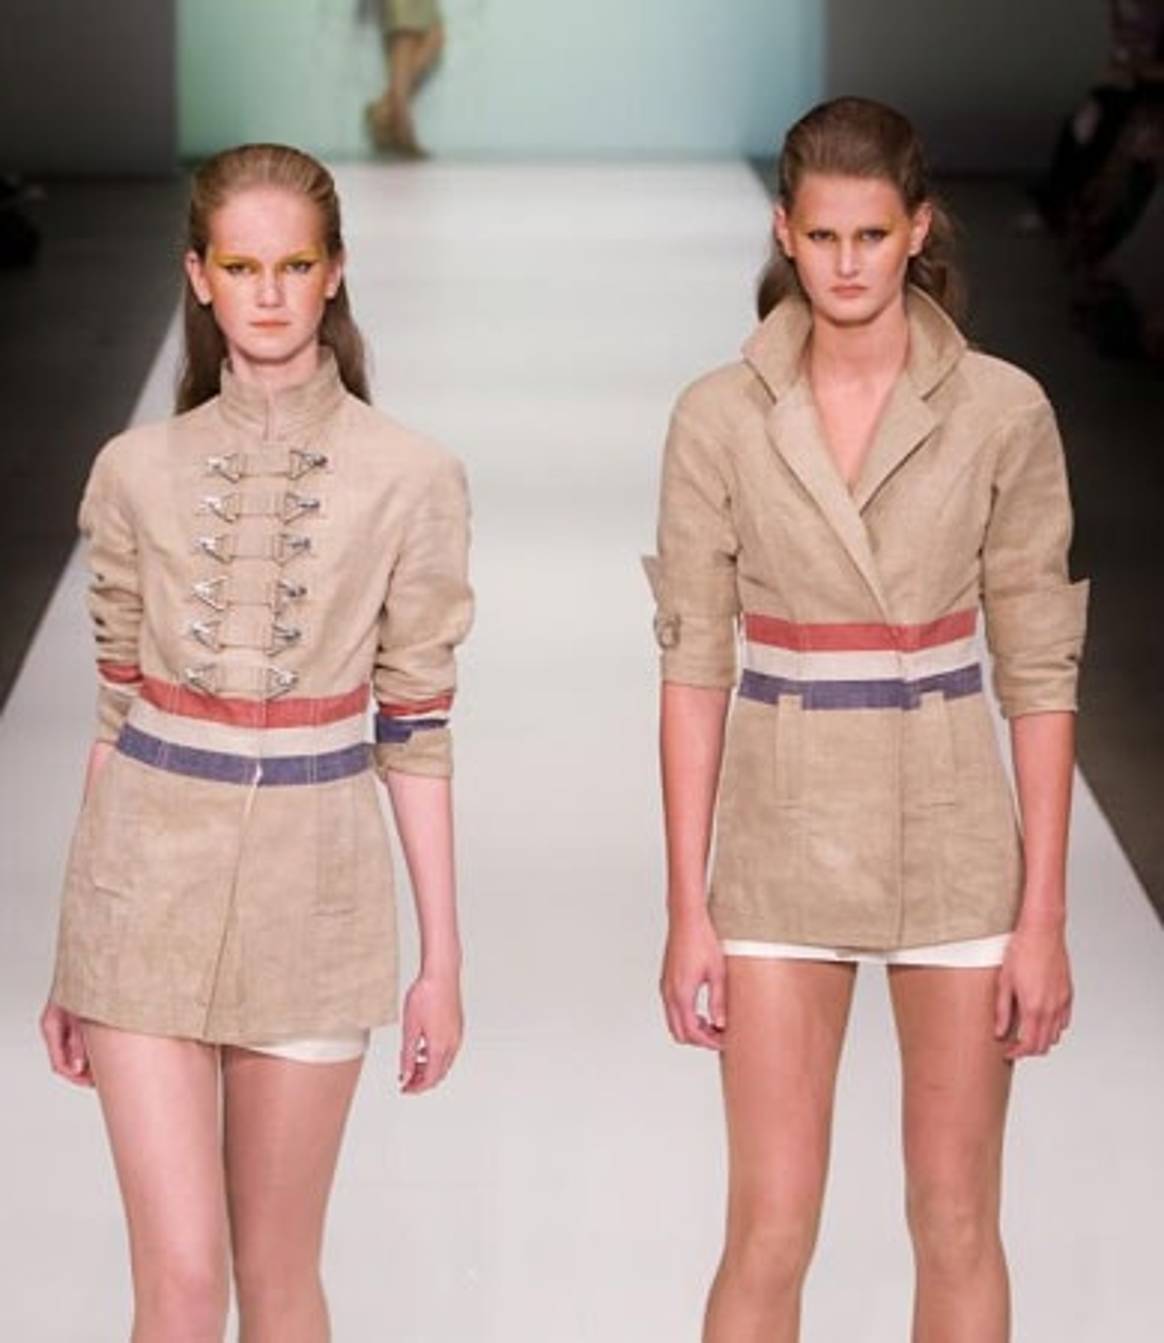 Fashionnl richt schijnwerper op Nederlandse mode